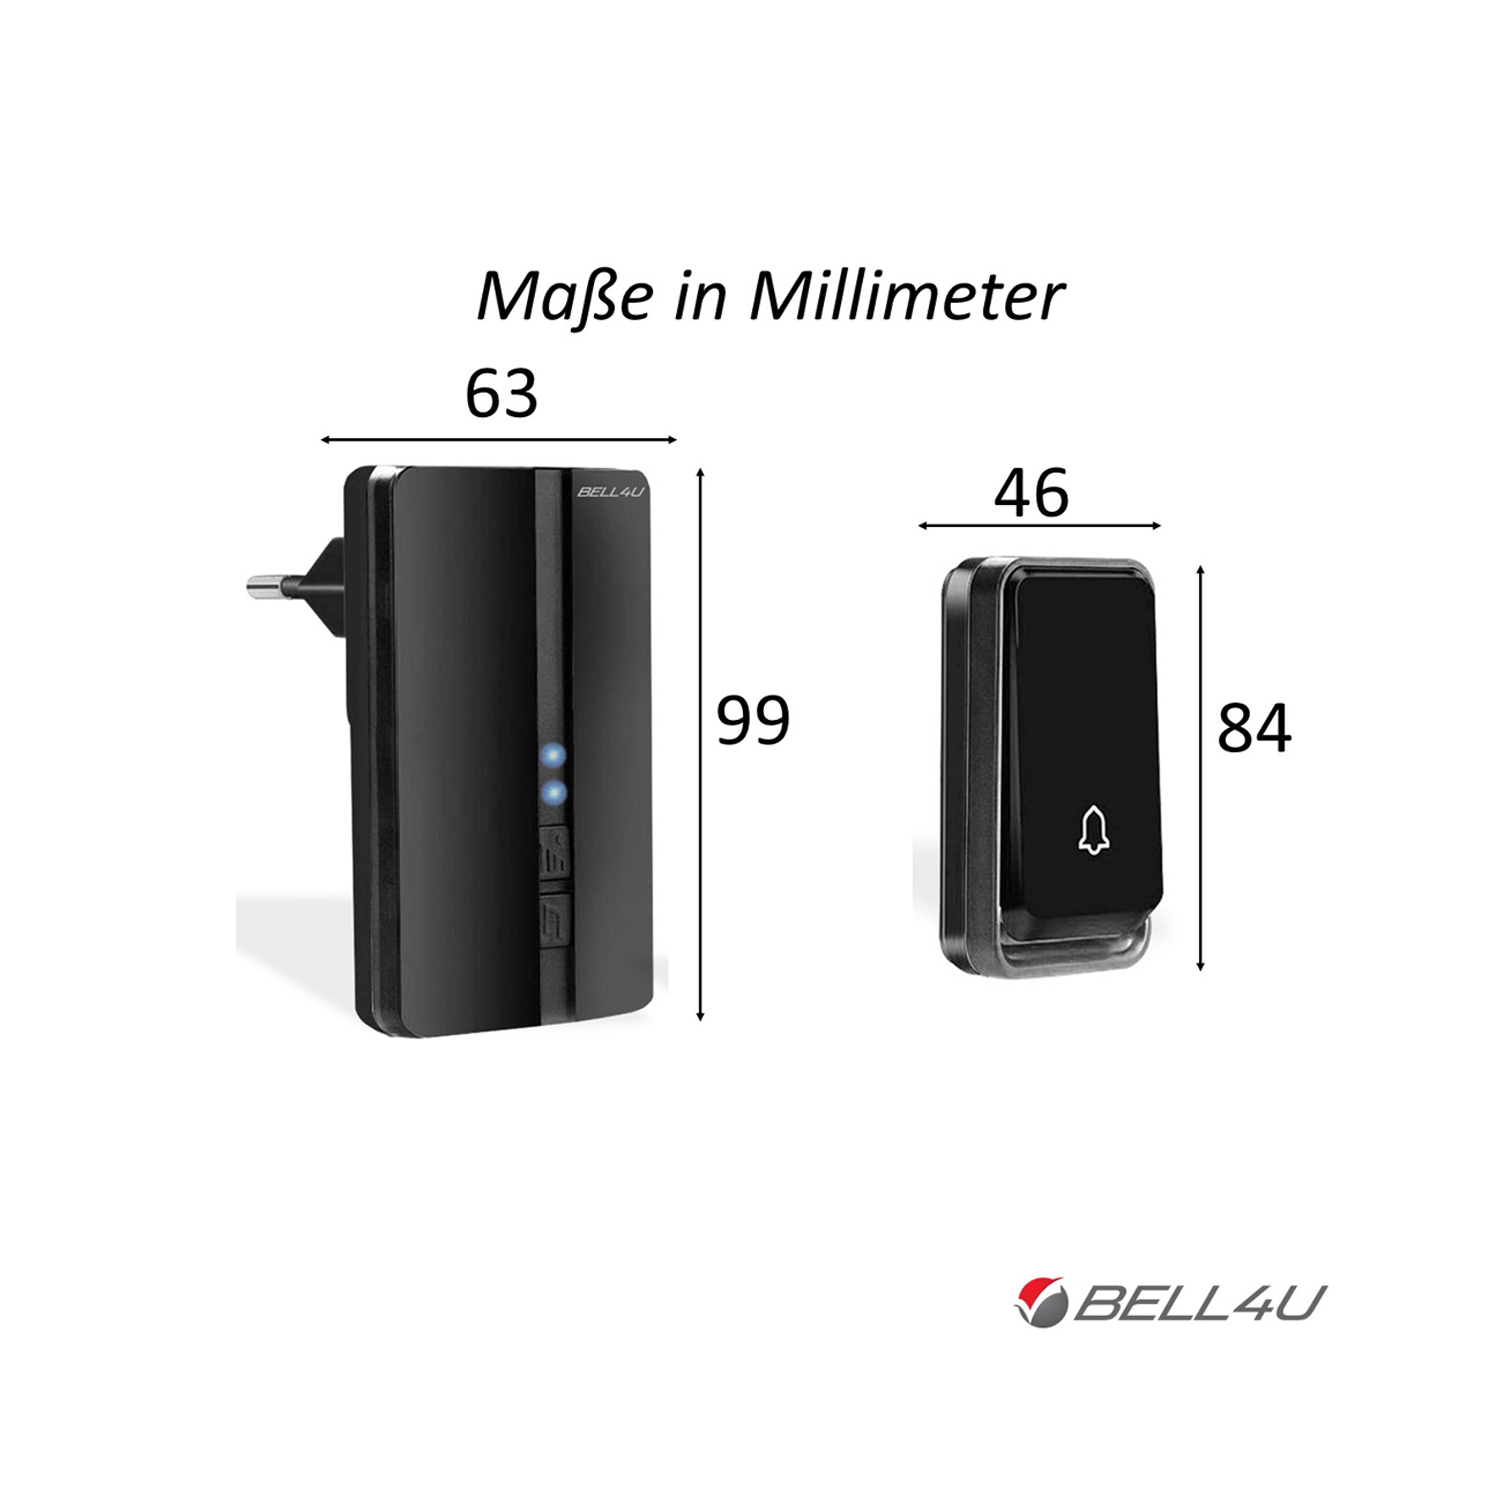 BELL4U Batterielos - 4 Türklingel Empfänger